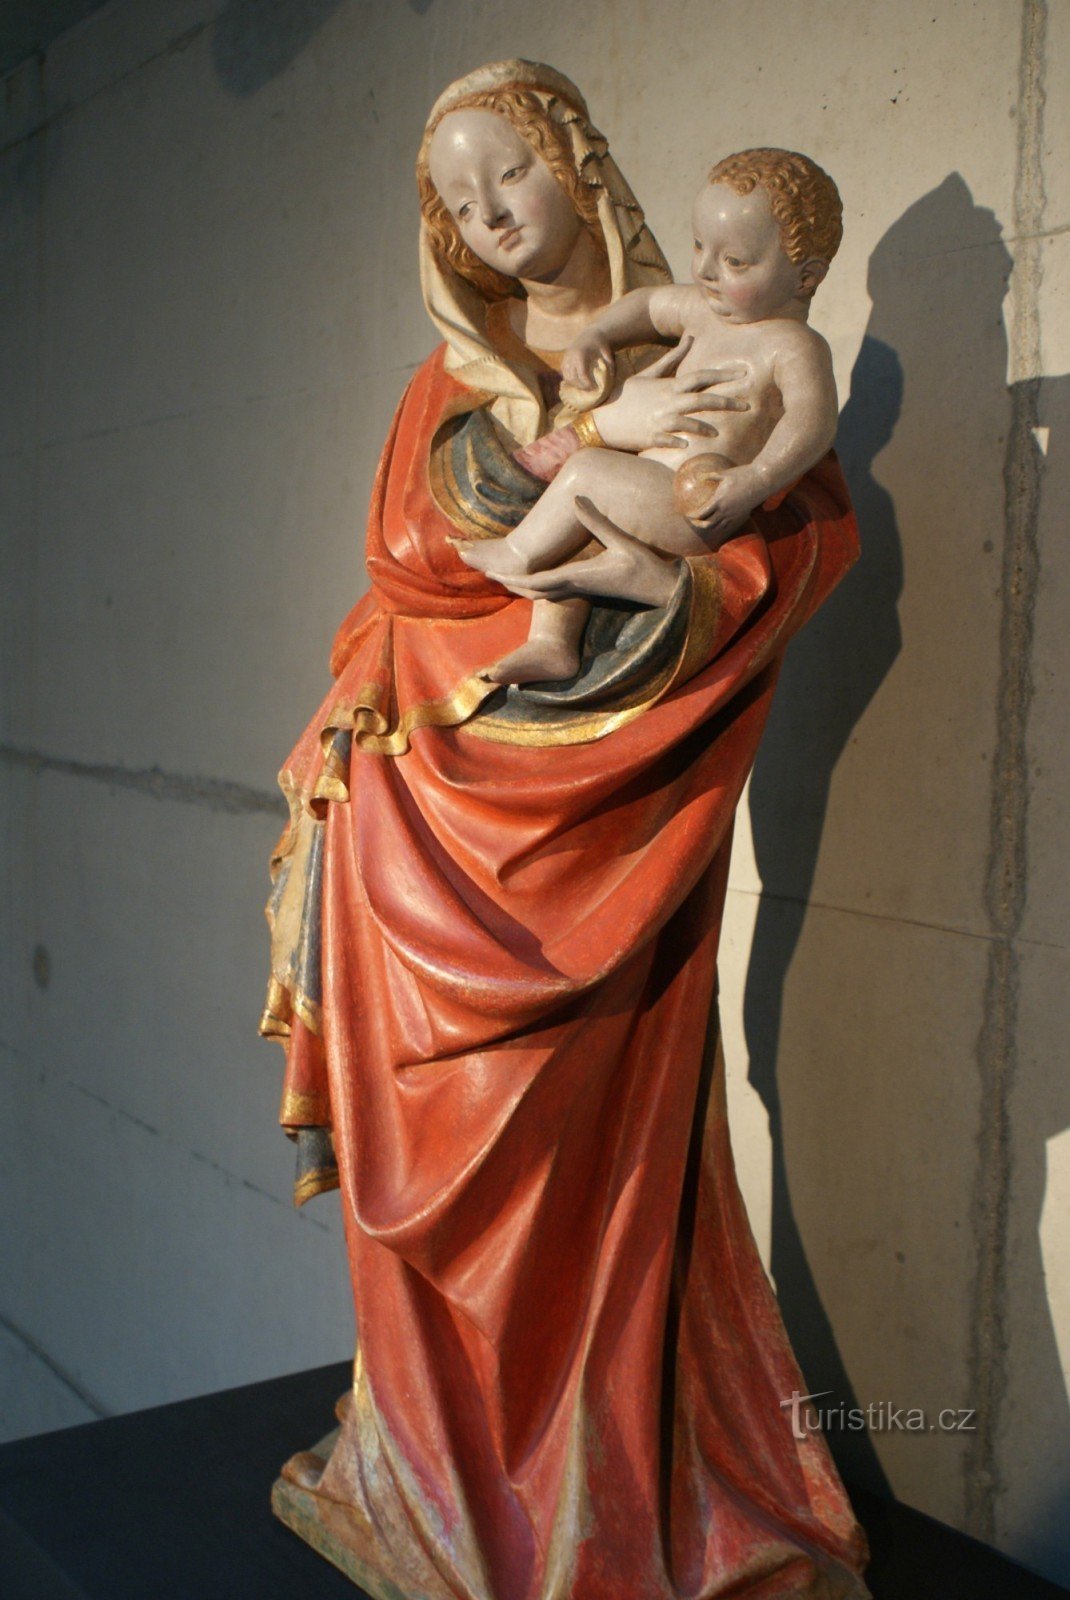 Olomouc - Šternberská Madonna, το στολίδι της έκθεσης του Μουσείου της Αρχιεπισκοπής